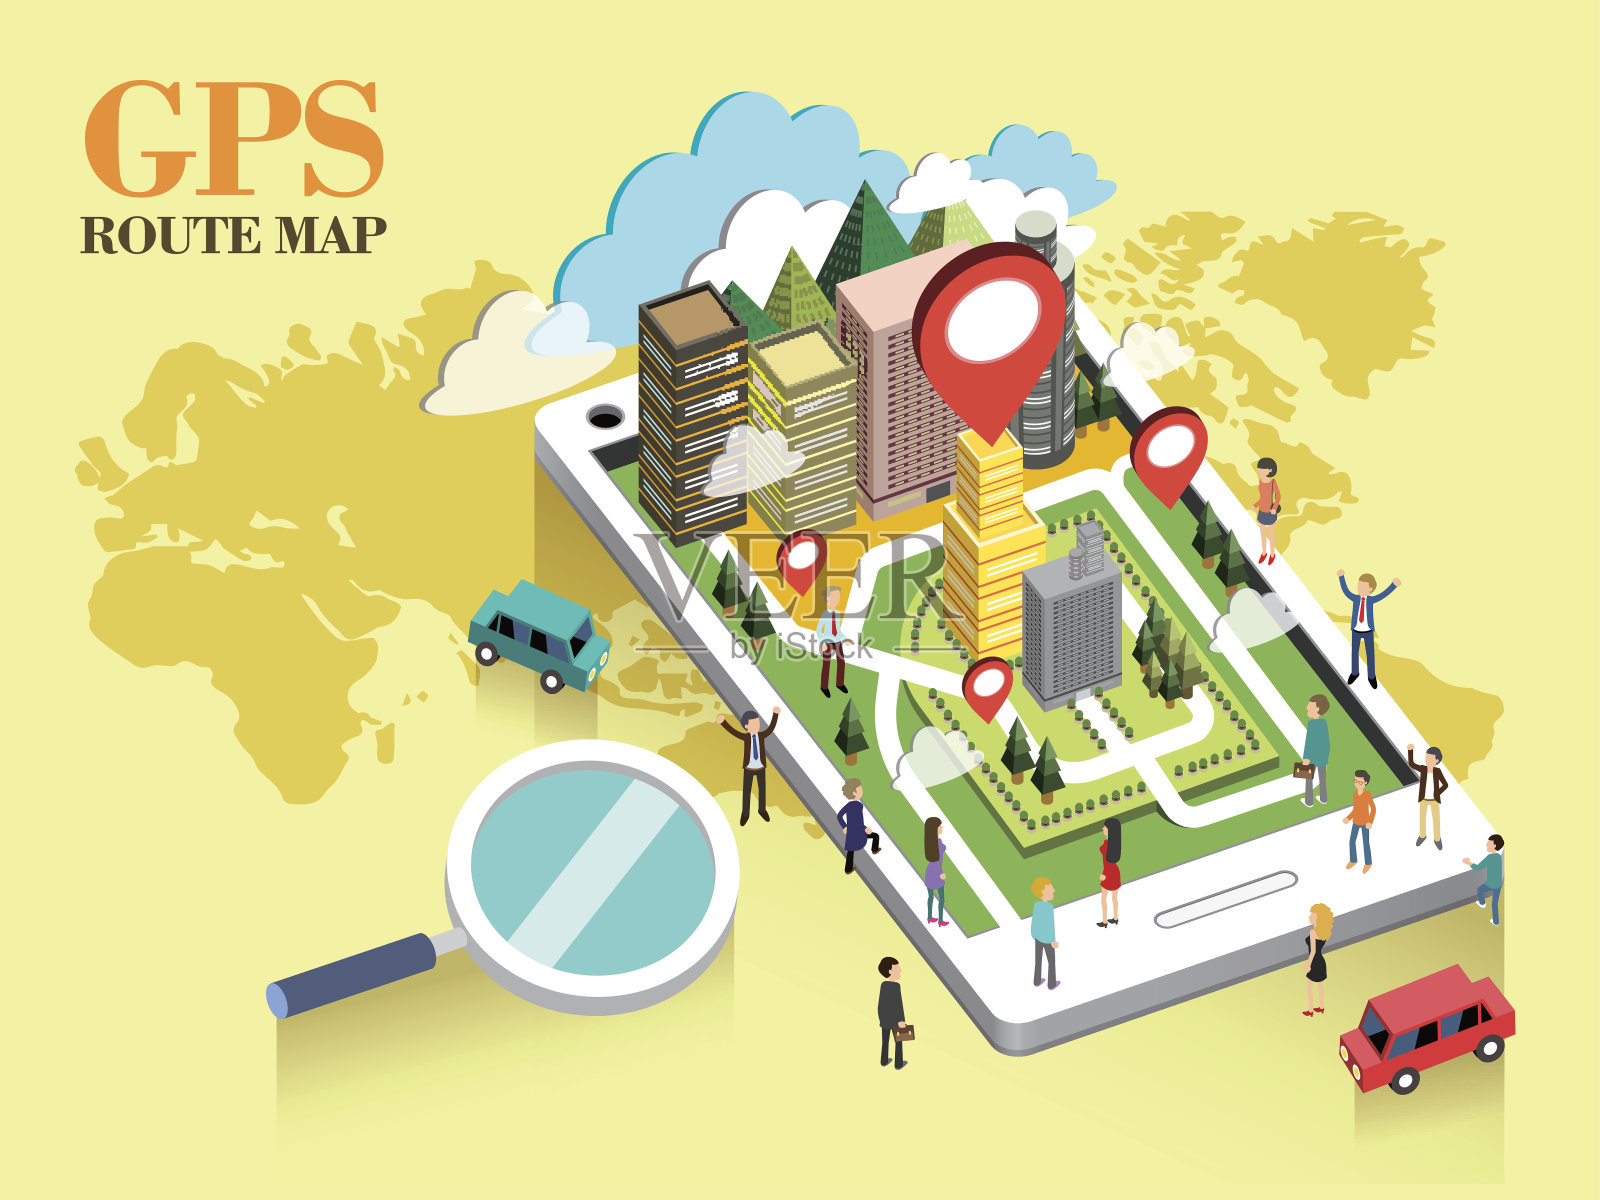 GPS路线图概念插画图片素材